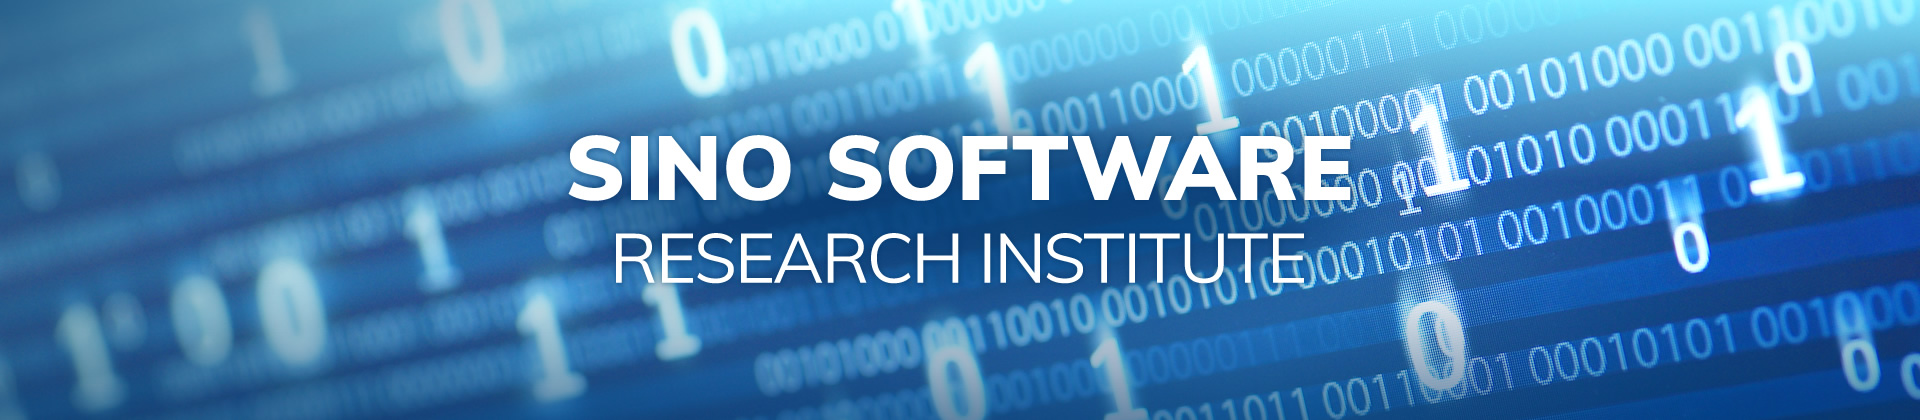  Sino Software Research Institute